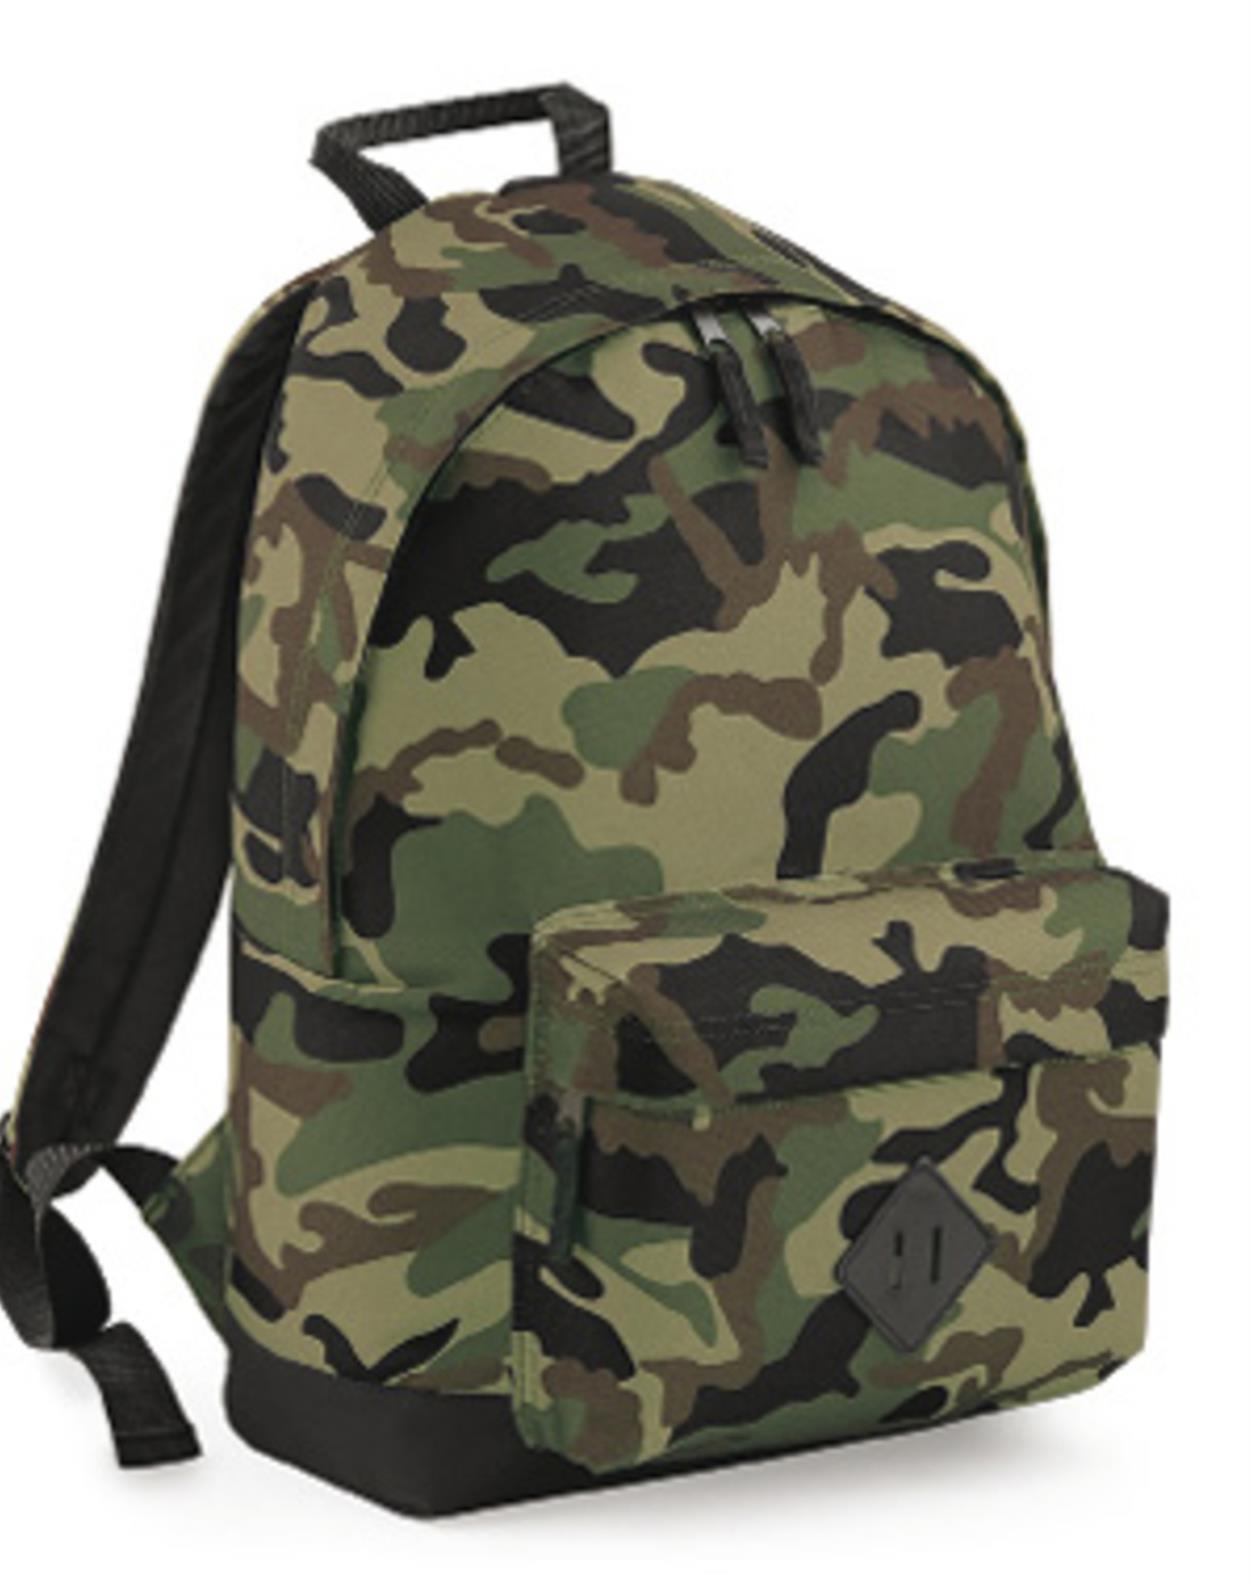 BG175 Camo Backpack Image 1